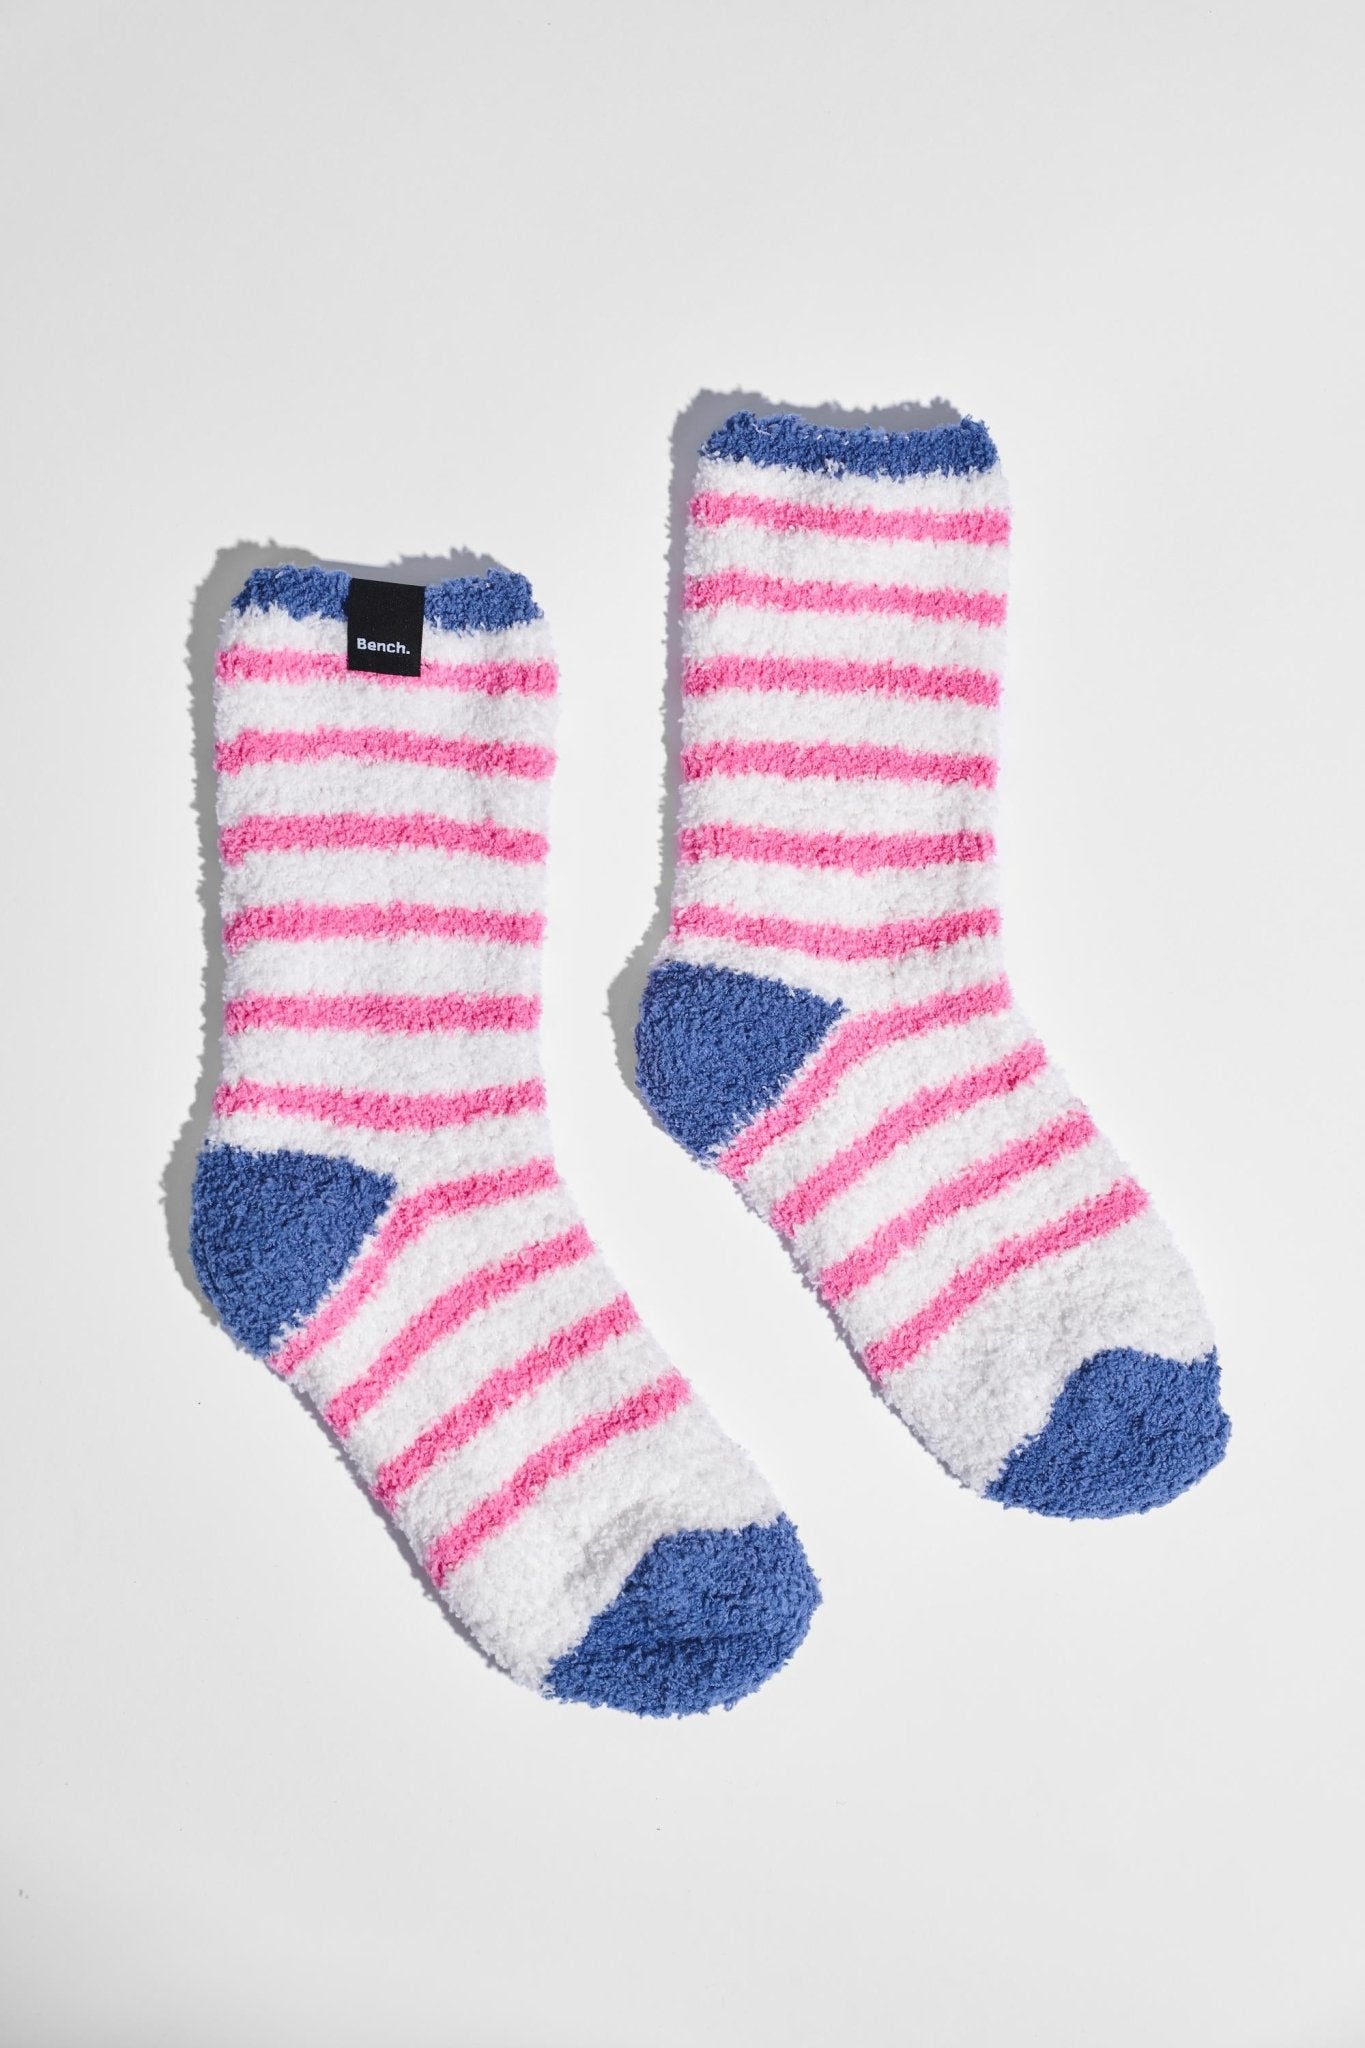 Womens 'MILDRED' 3 Pack Slipper Socks - ASSORTED - Shop at www.Bench.co.uk #LoveMyHood